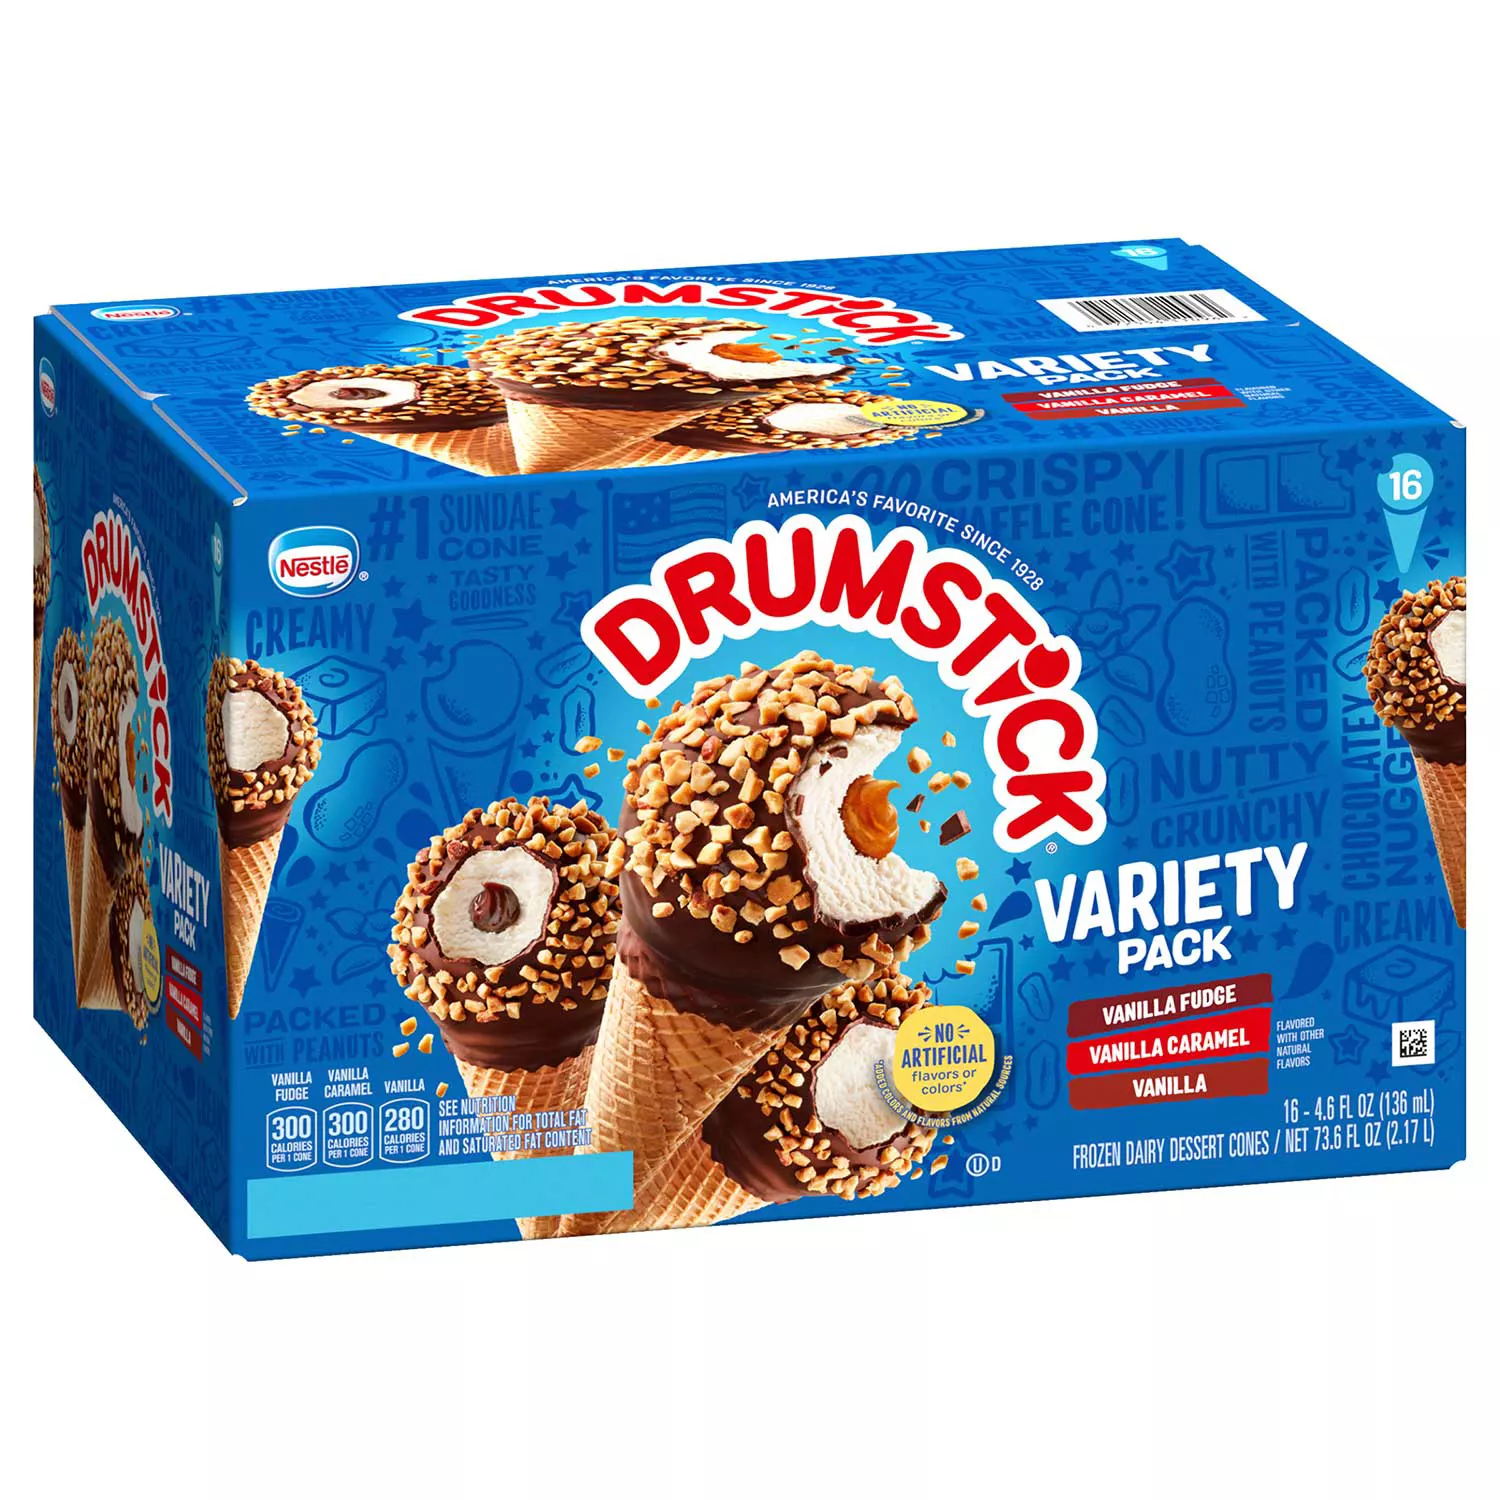 Nestle Drumstick Variety Pack 16ct $8.88 at Sam’s